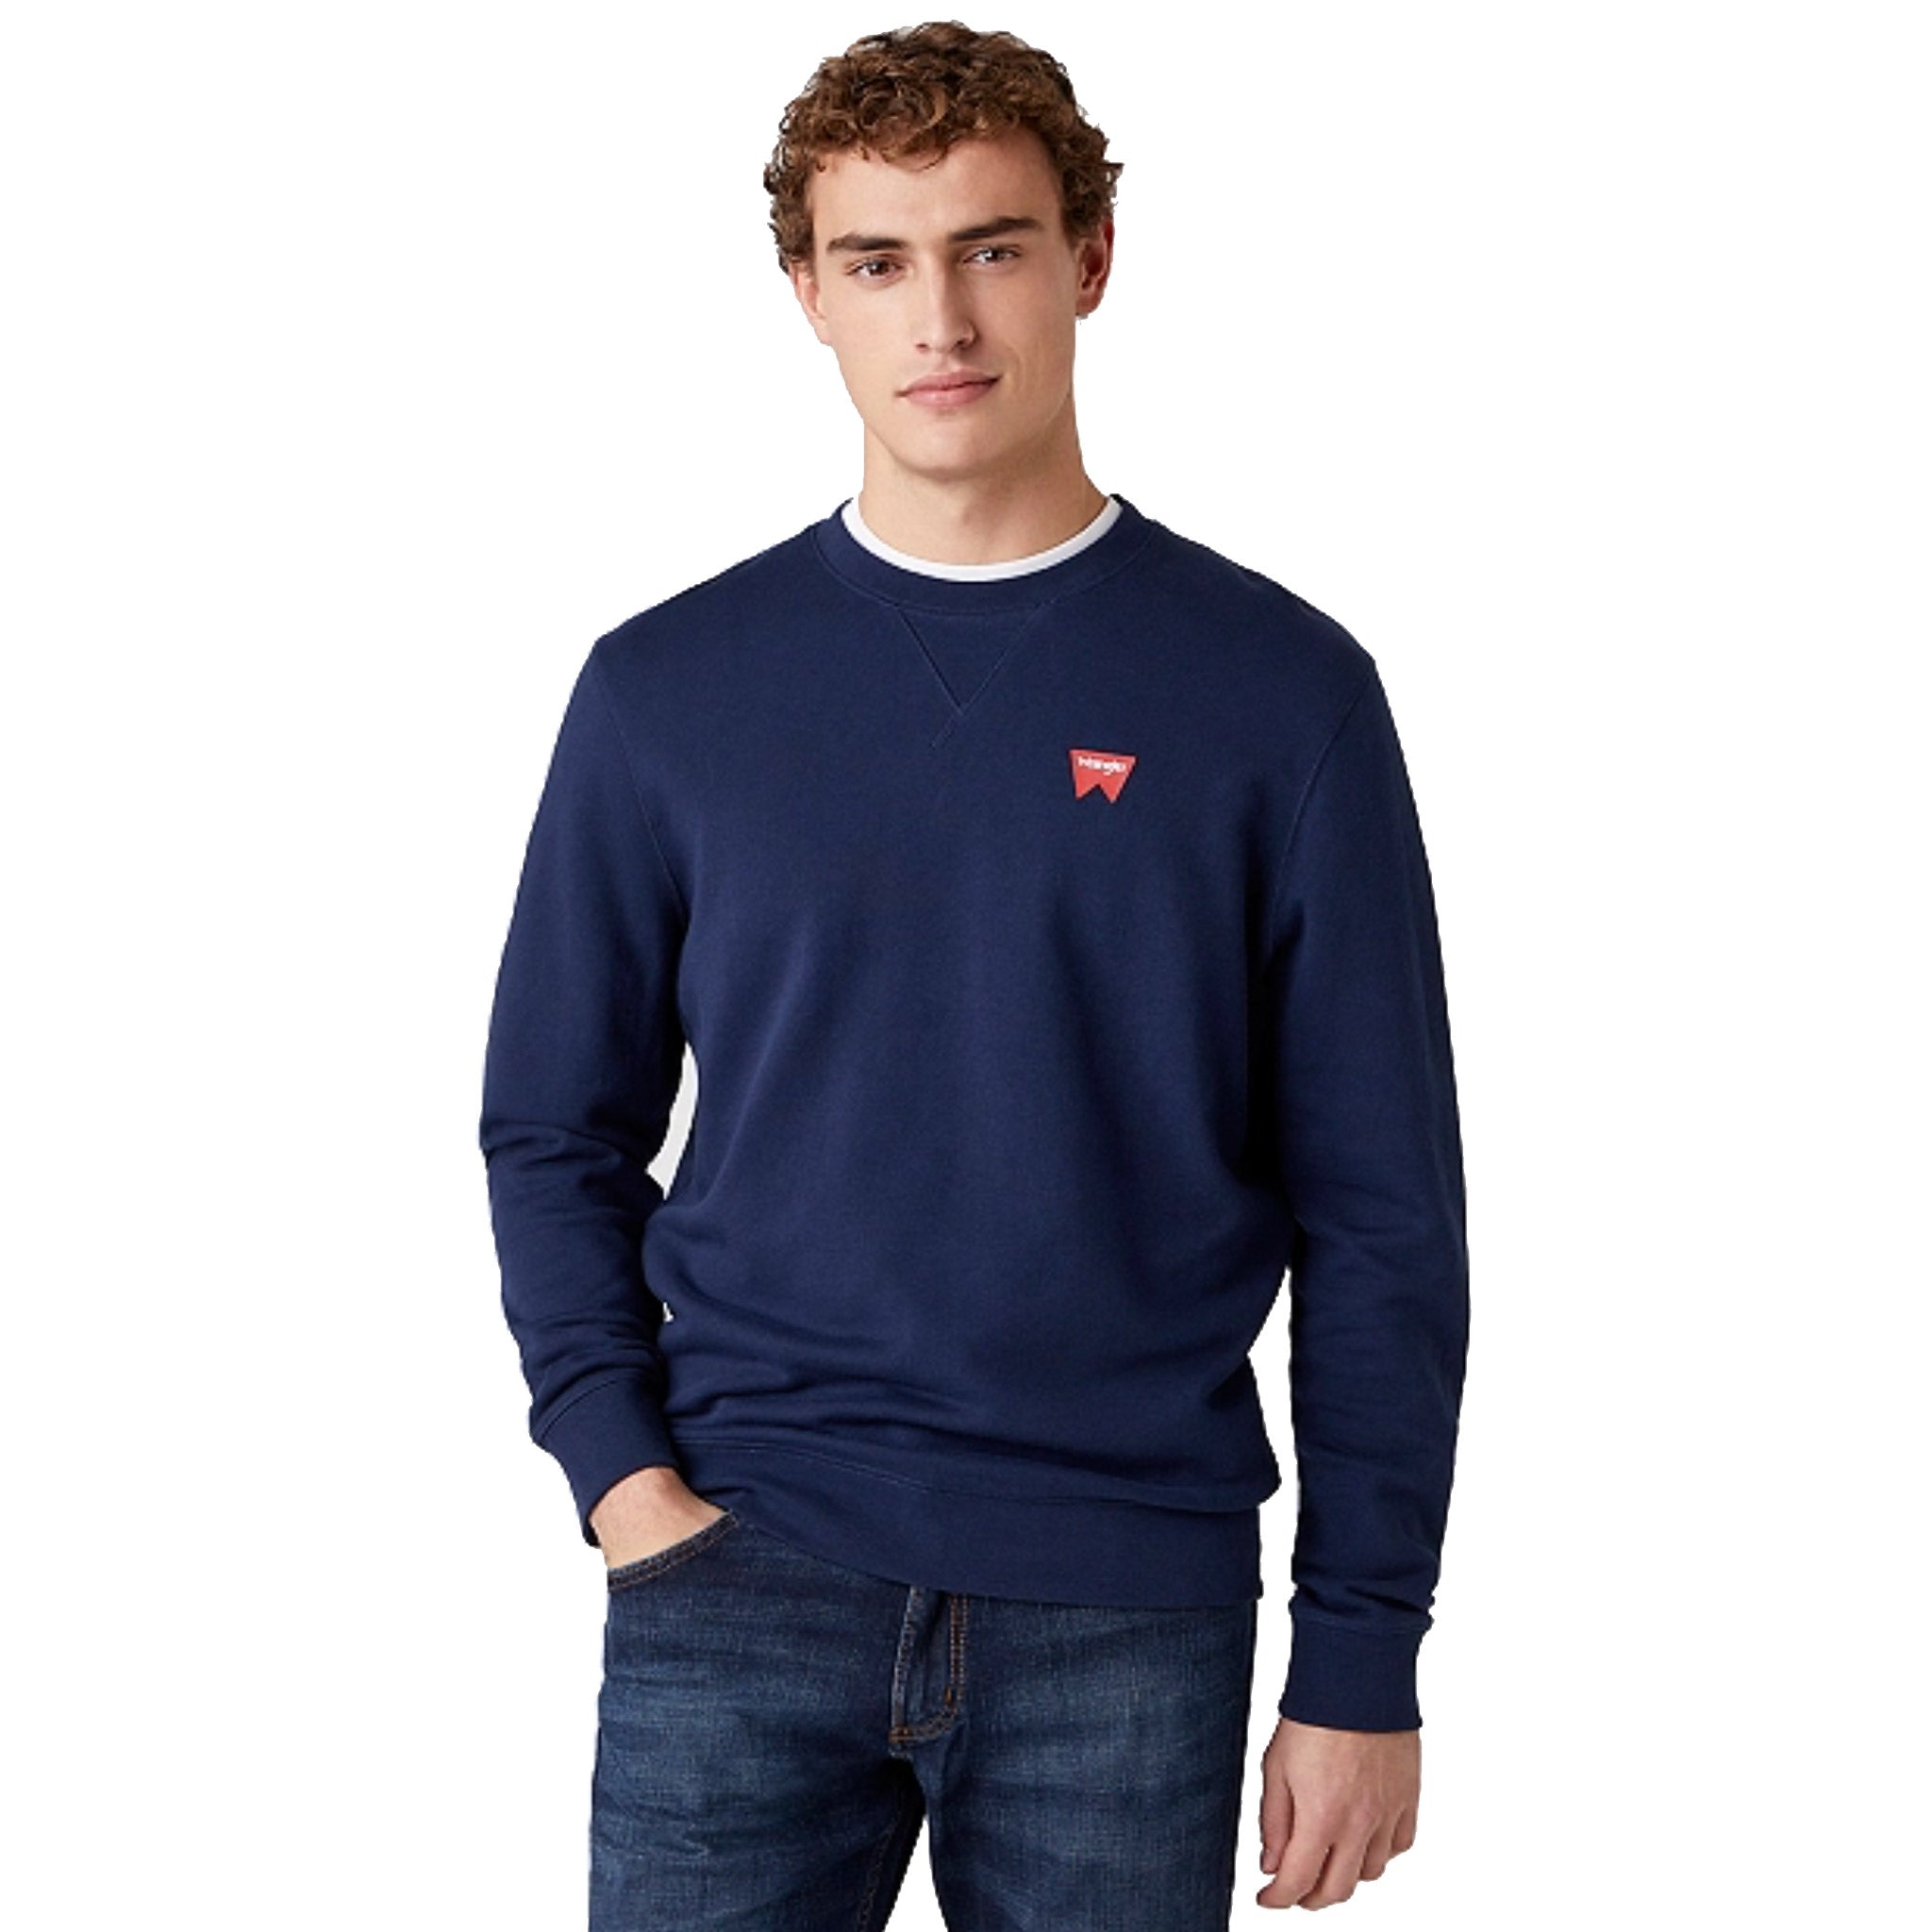 Wrangler Sign Off Sweatshirt in Navy Worn By Model With Hand In Pocket